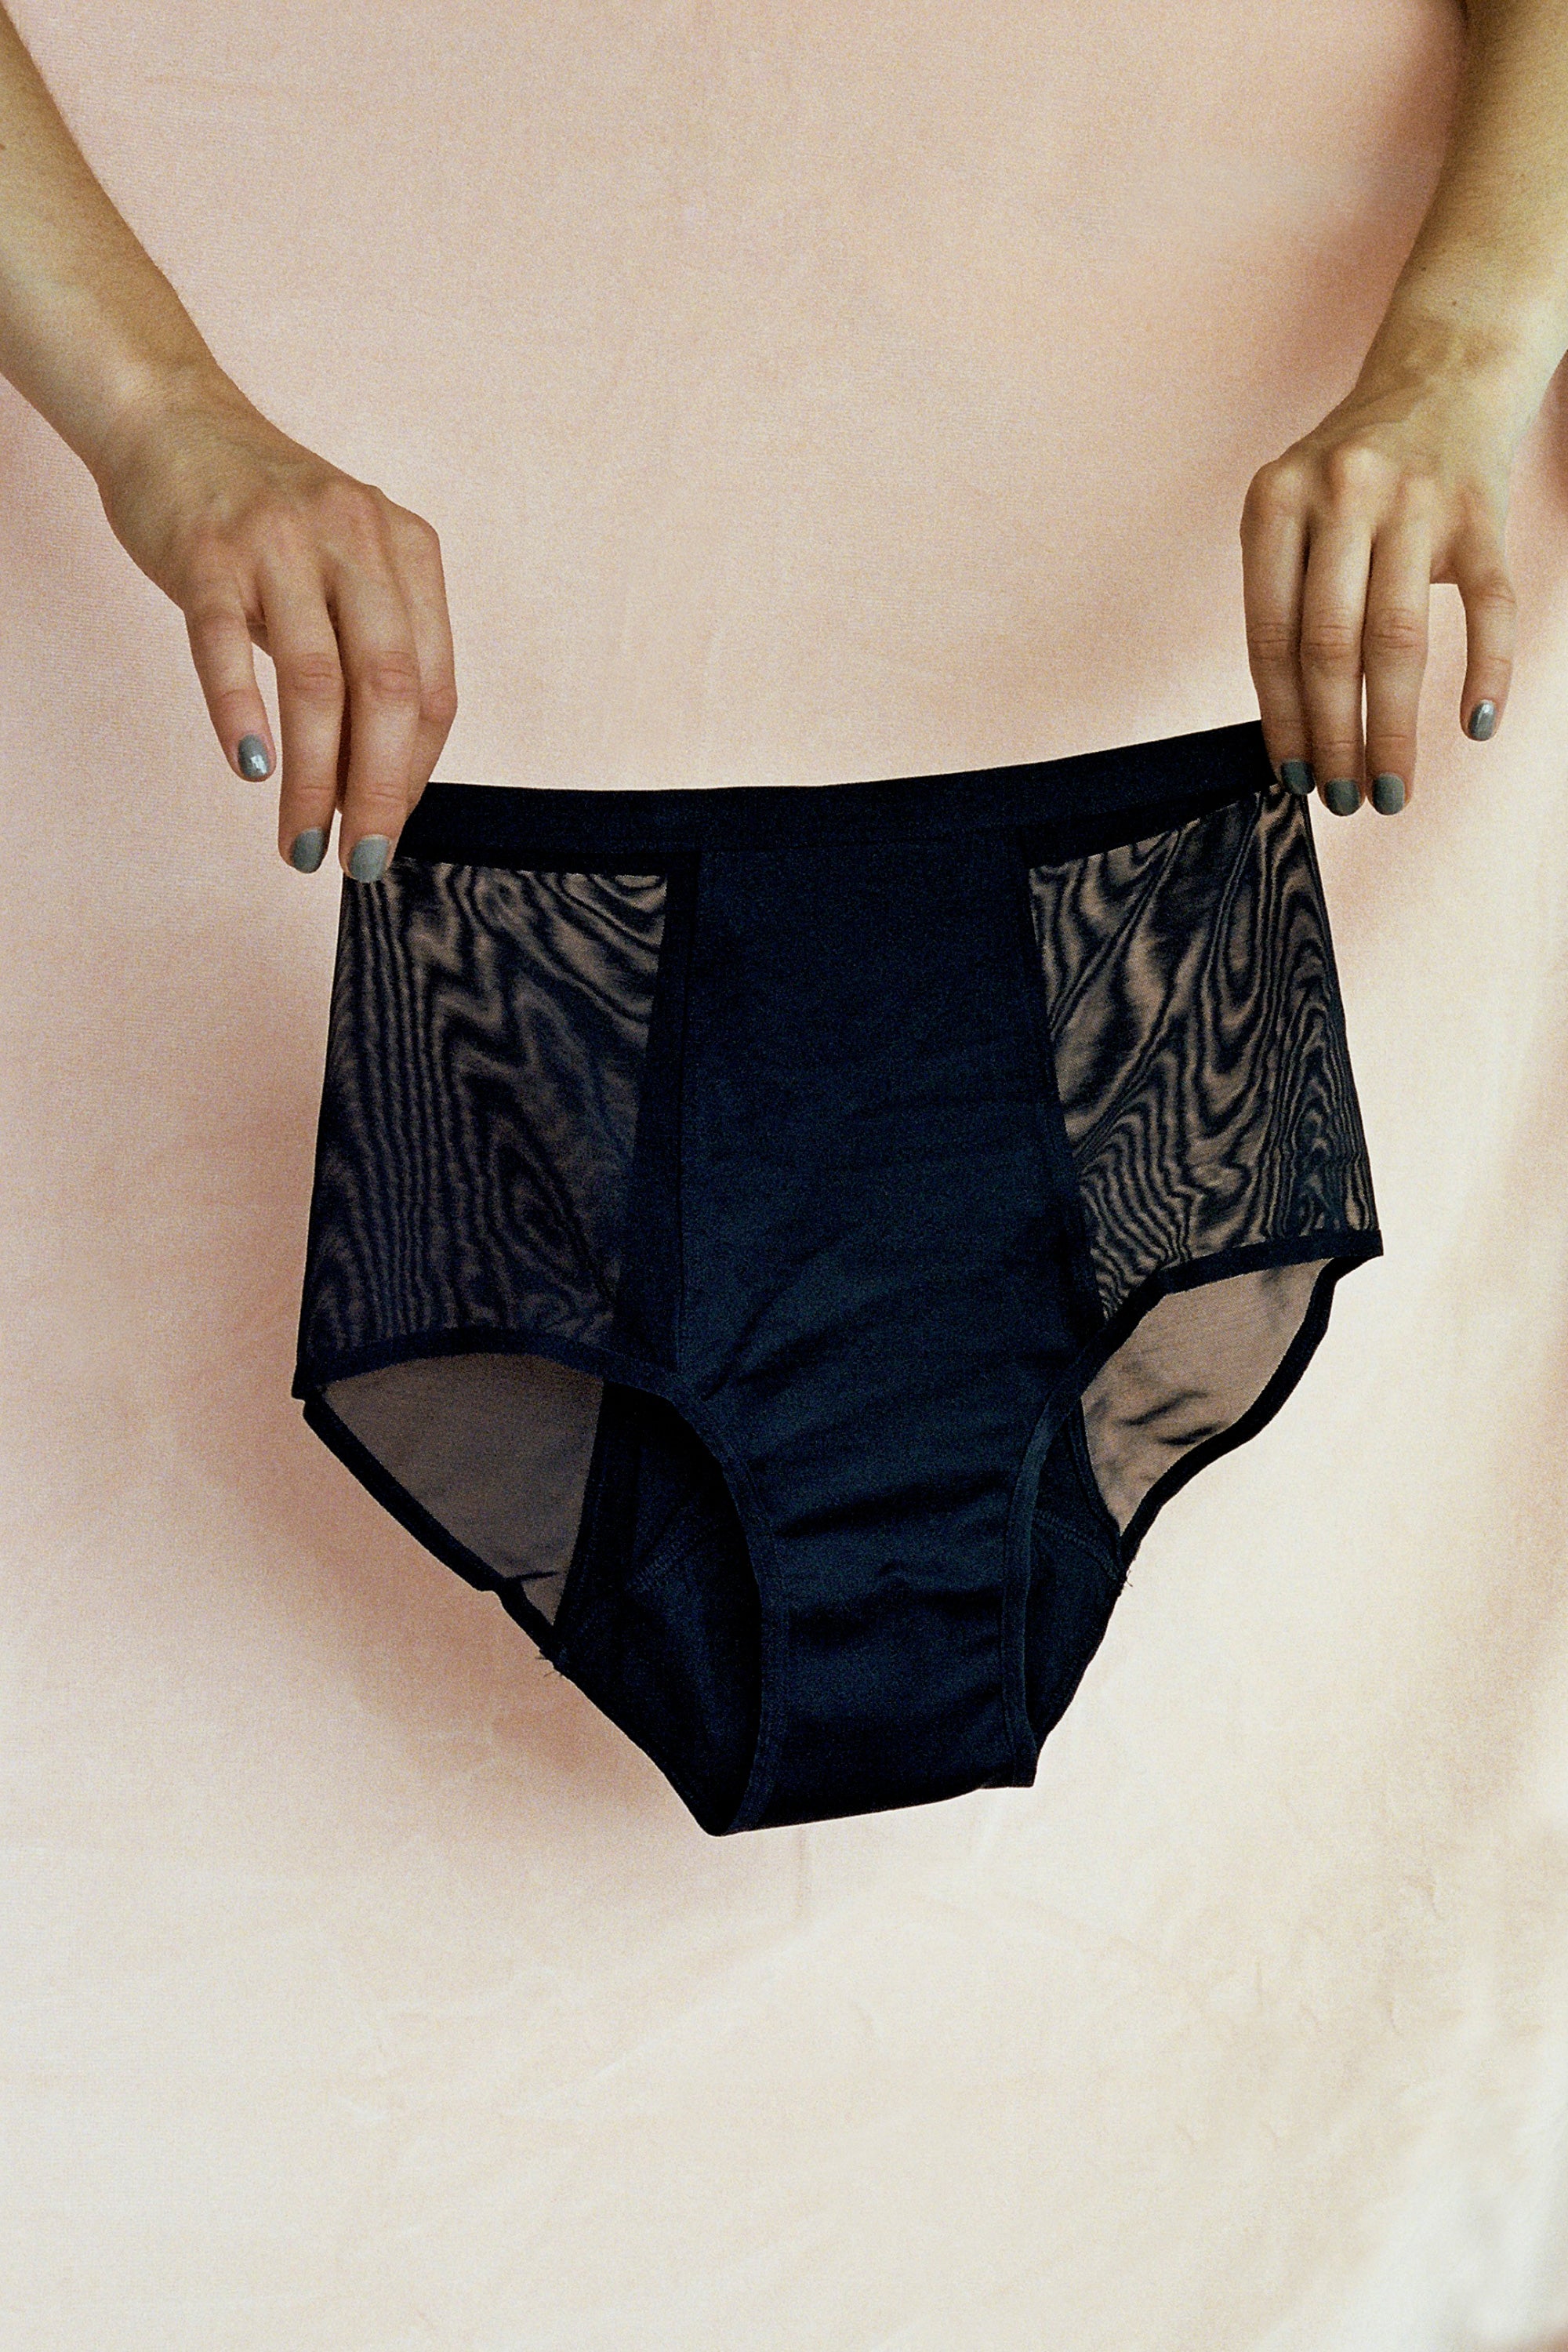 Period Panties (Menstrual Underwear) Market Strong Momentum and